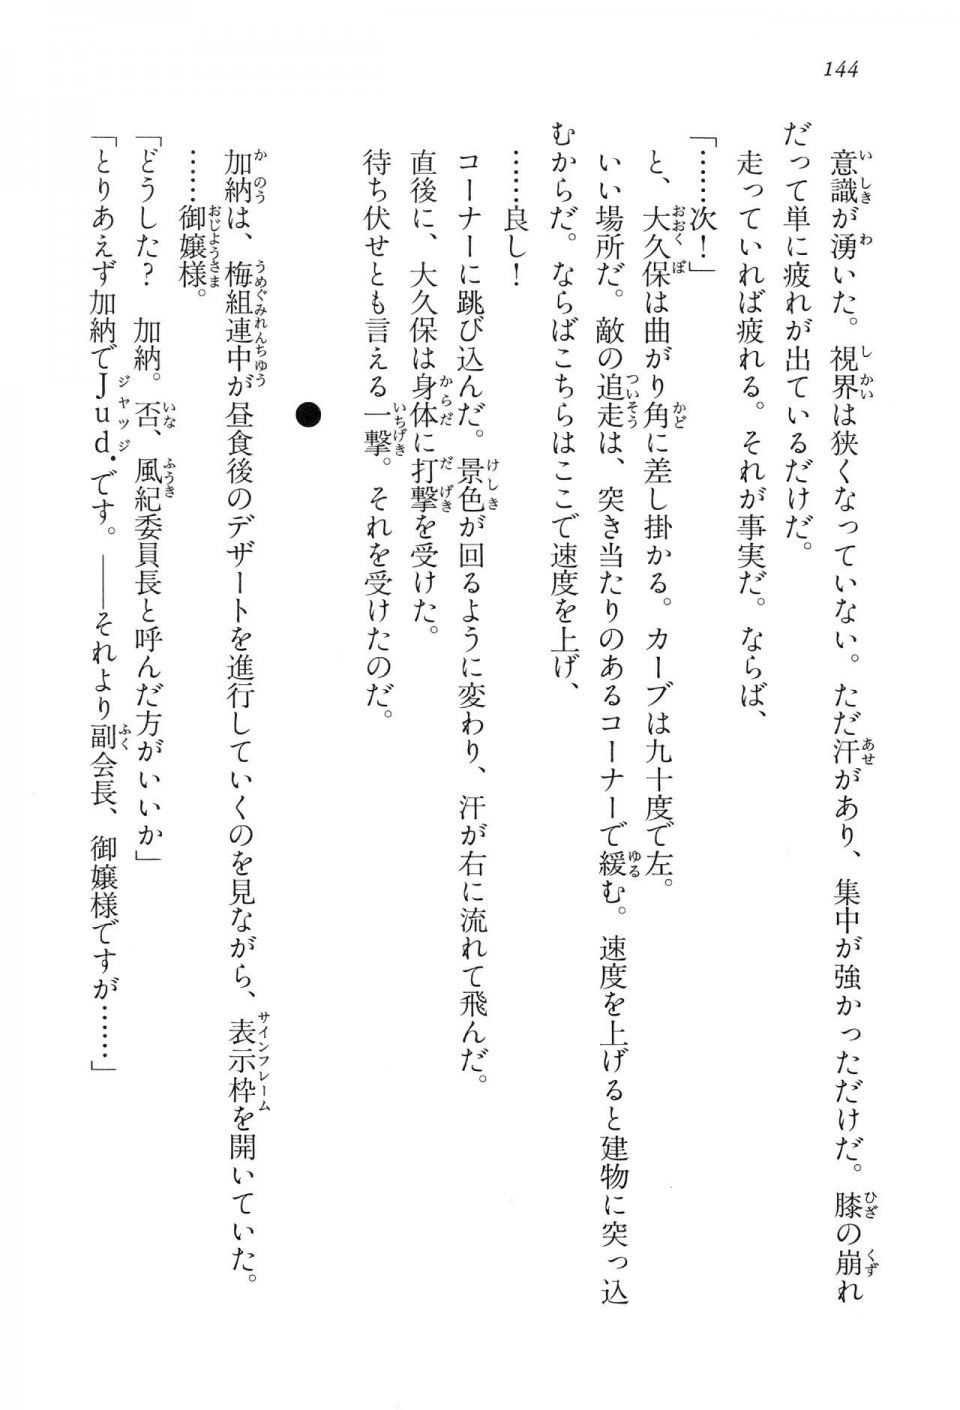 Kyoukai Senjou no Horizon LN Vol 15(6C) Part 1 - Photo #144